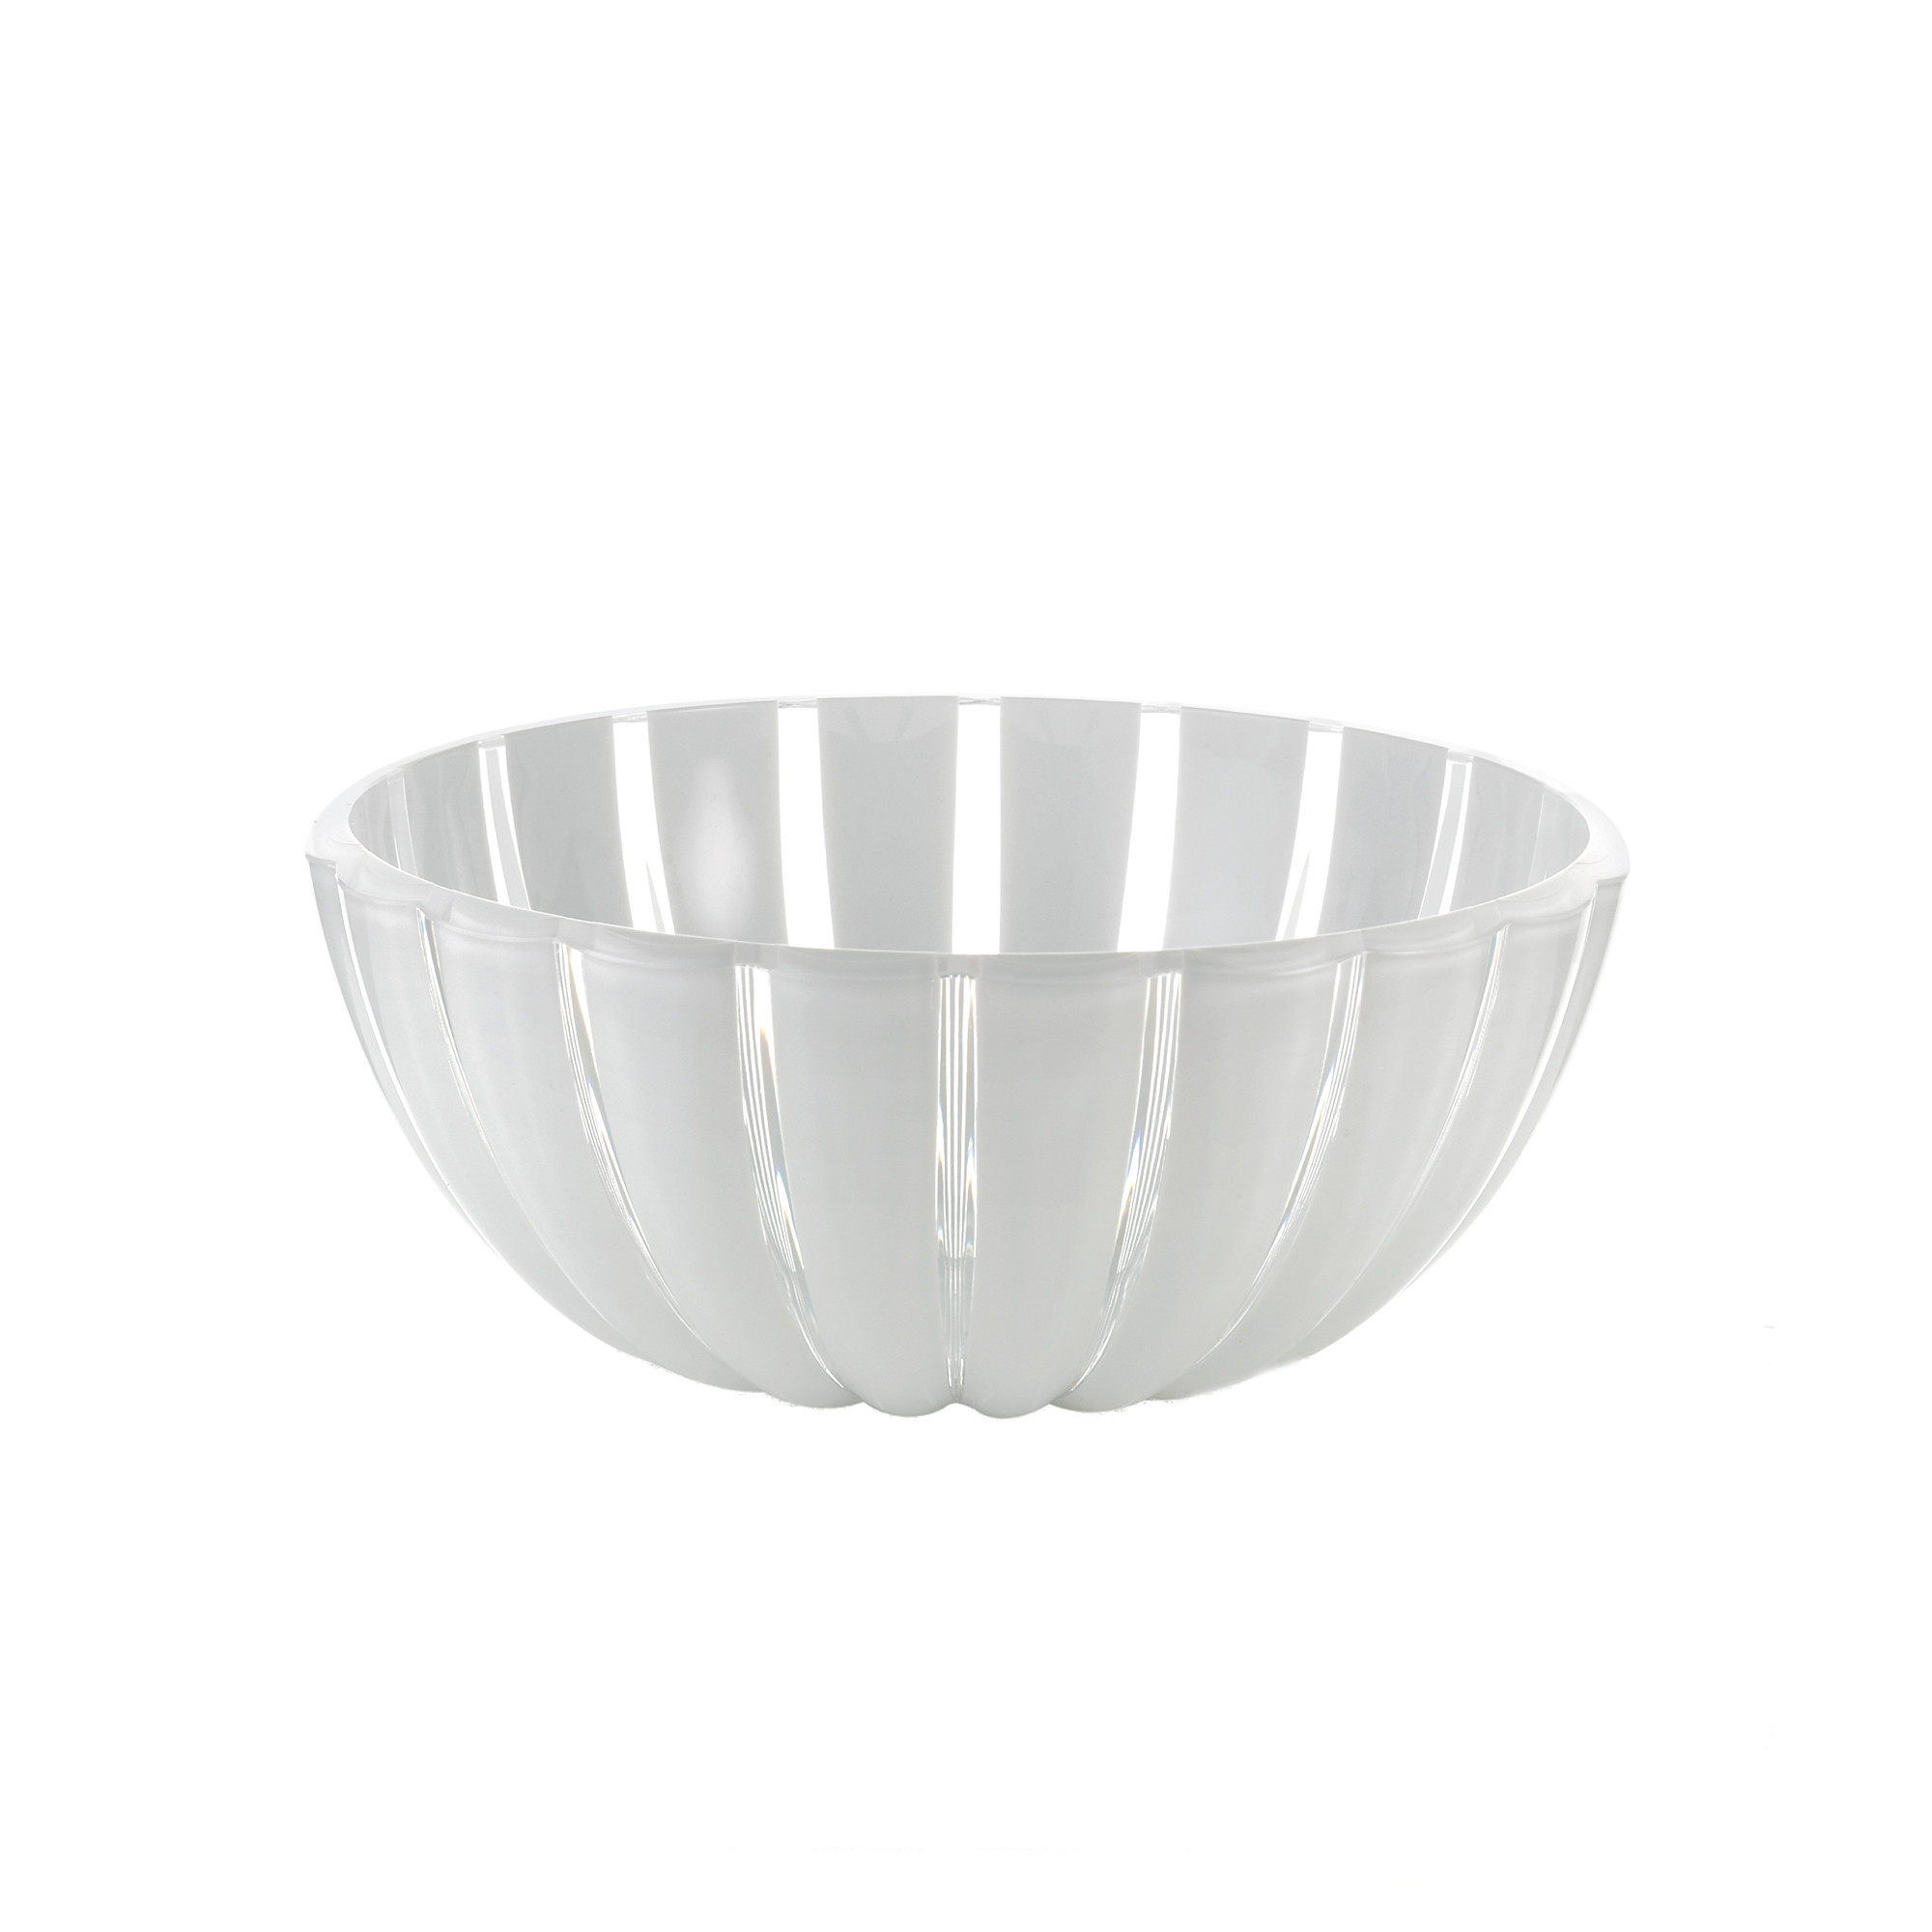 Guzzini 25cm White and Clear Acrylic Grace Bowl